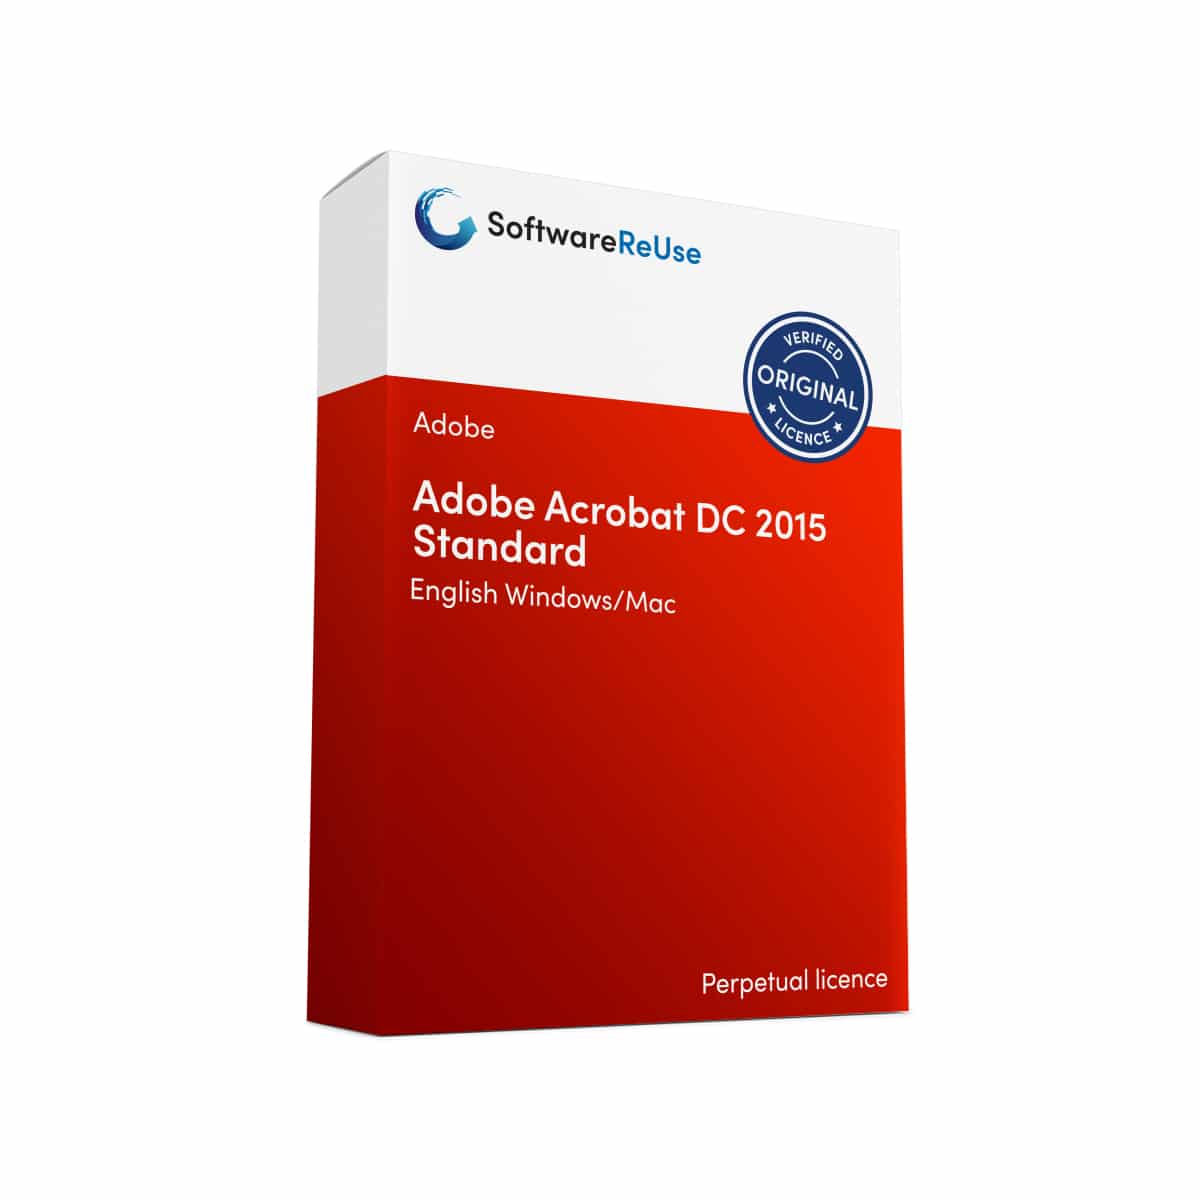 Adobe Acrobat DC 2015 Standard 1